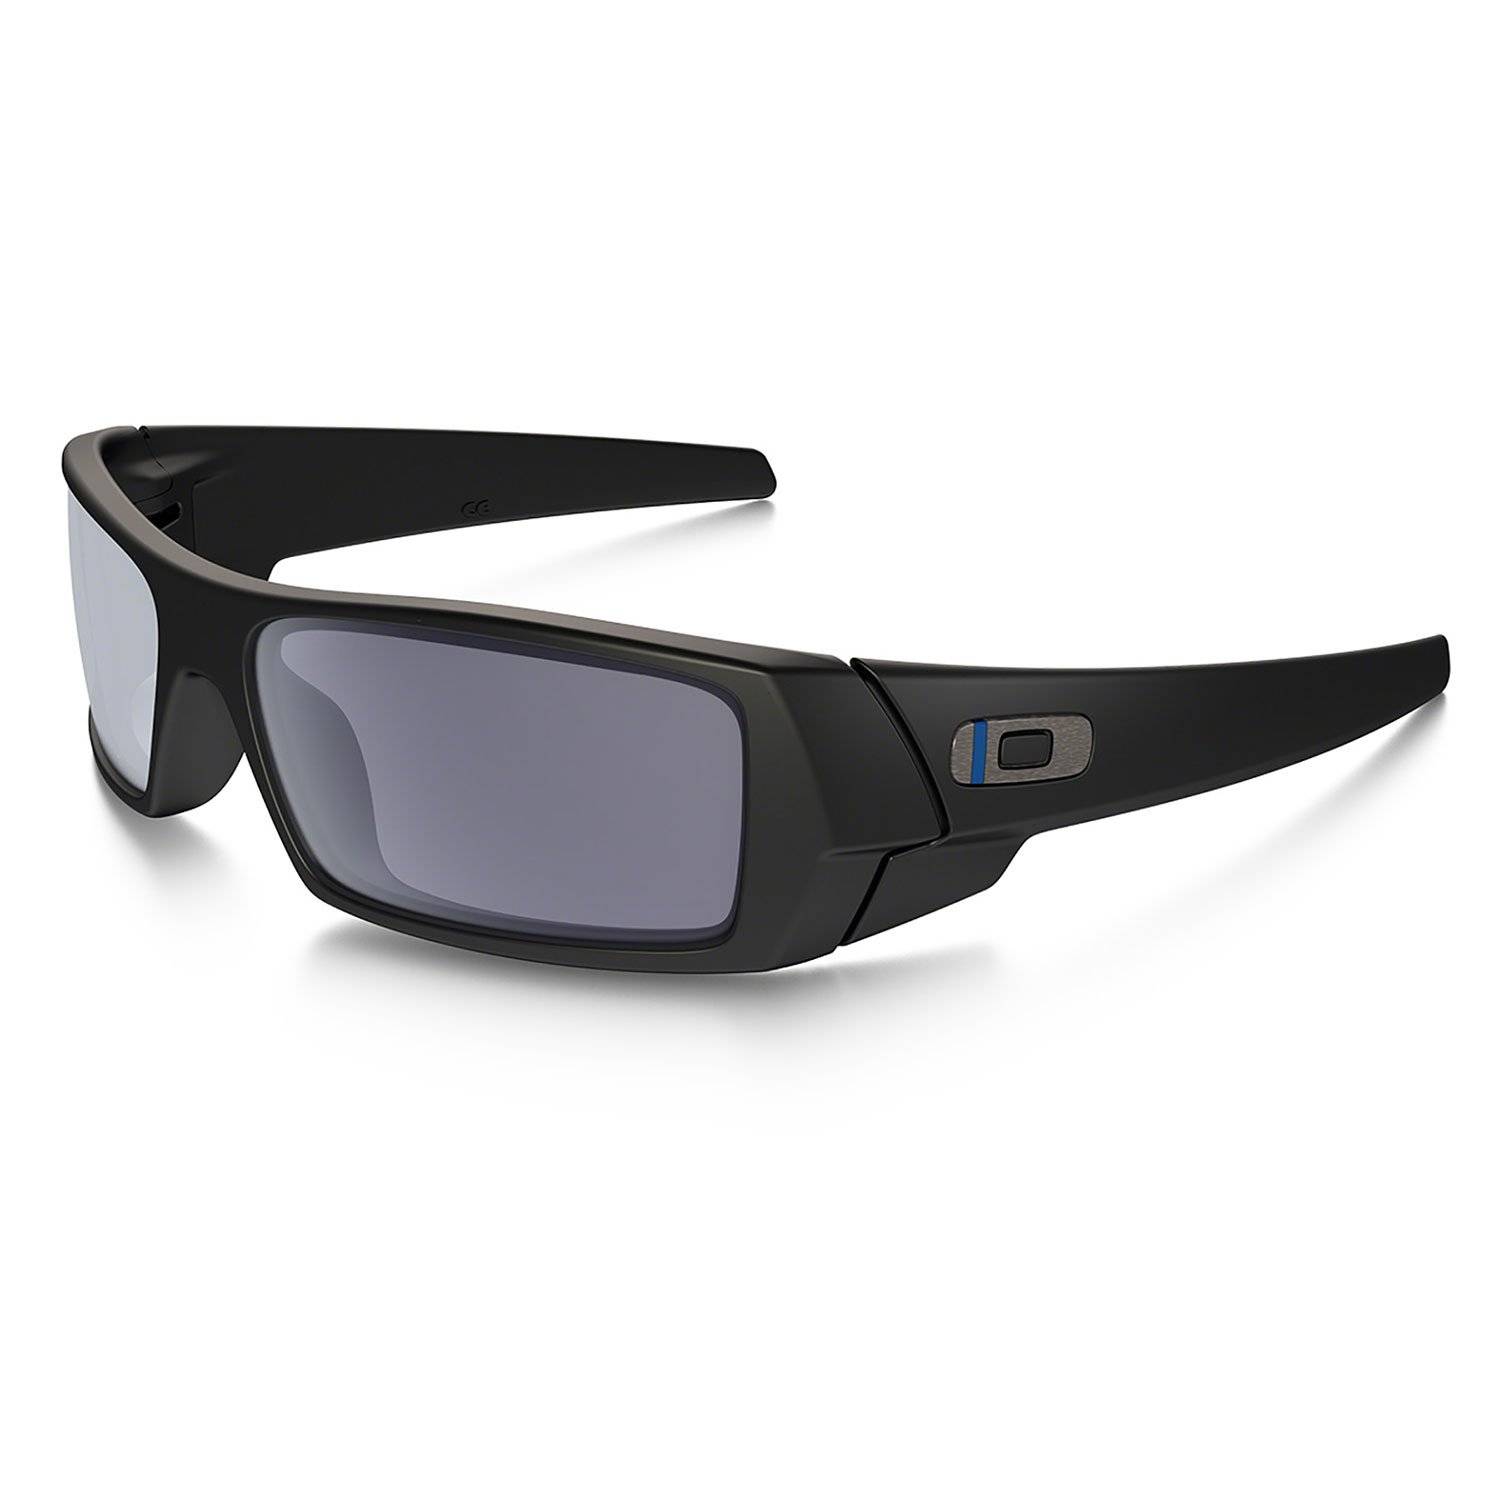 oakley thin blue line sunglasses